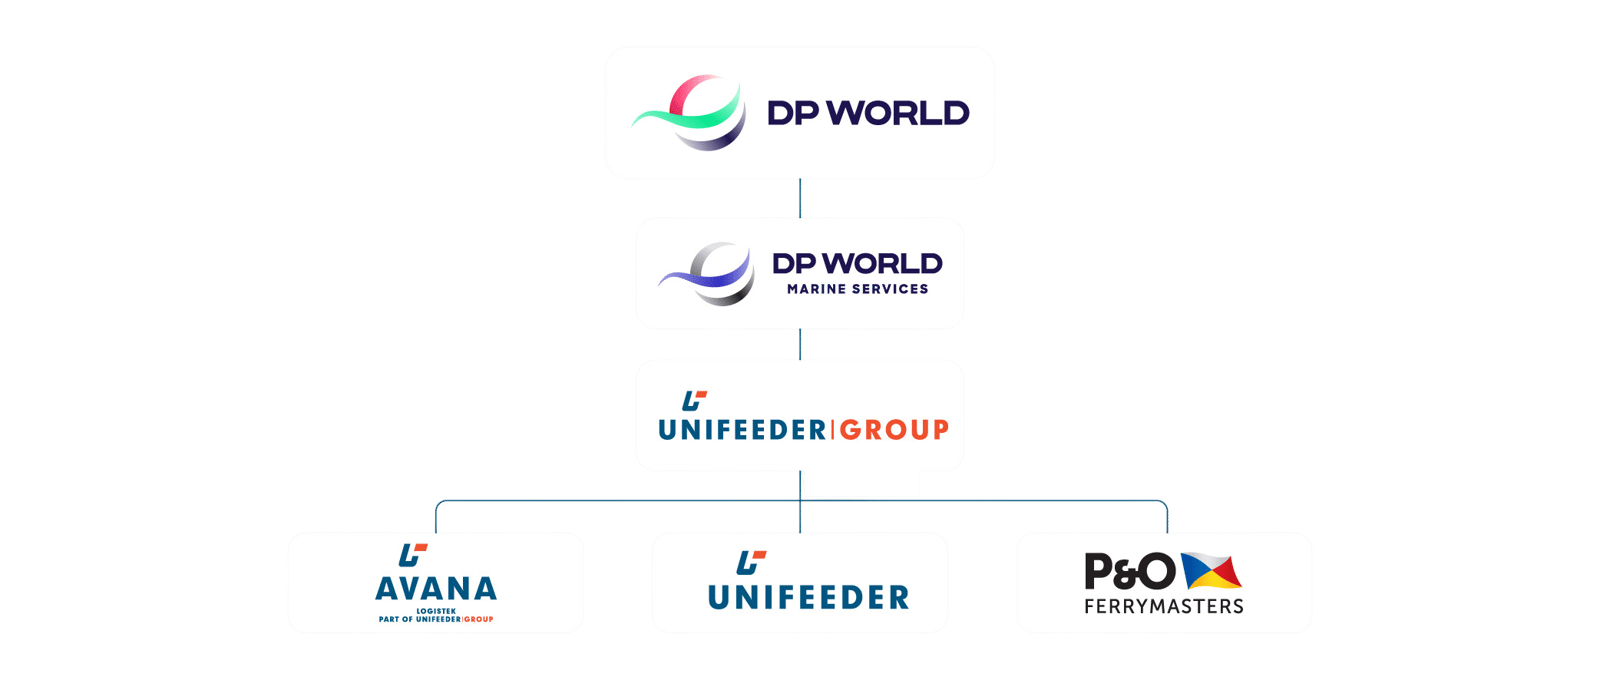 DP World Group_1